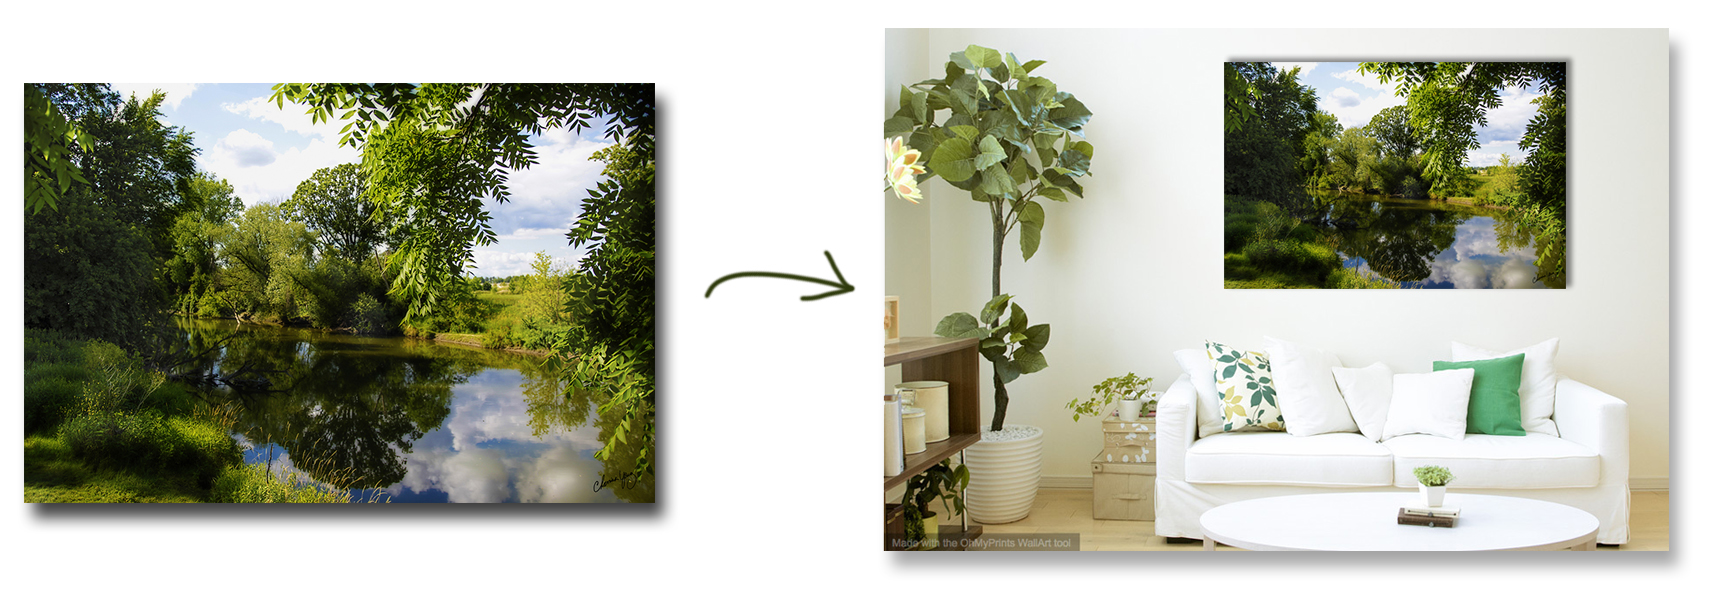 Chamira_Art_Green_Livingroom_Example